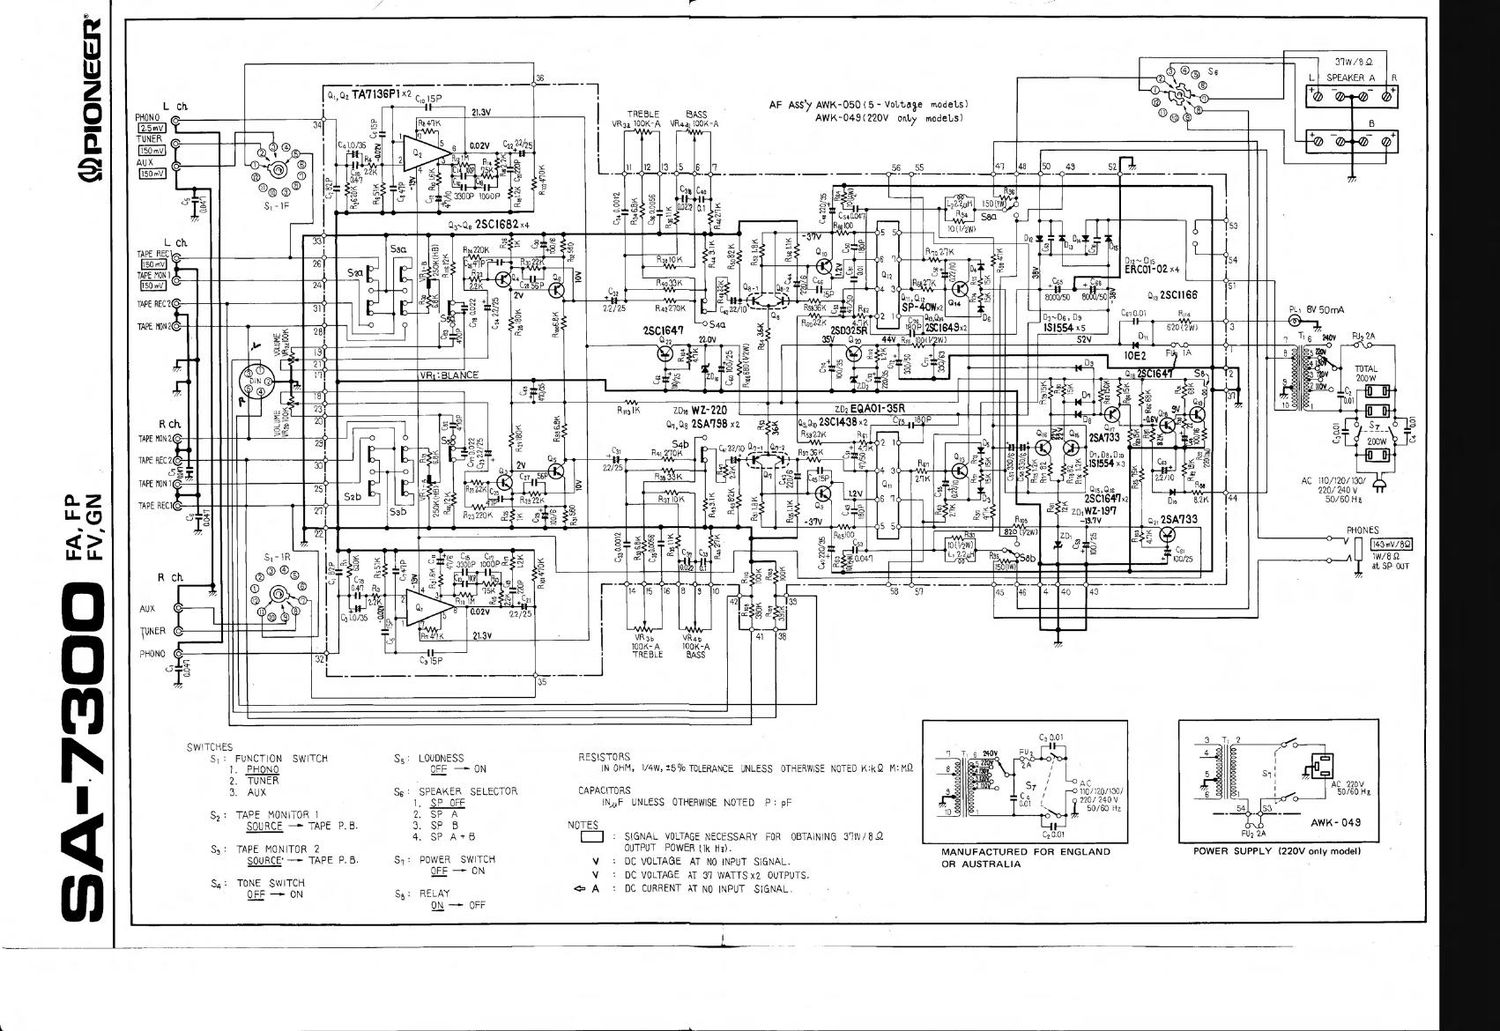 Pioneer SA 7300 Schematic